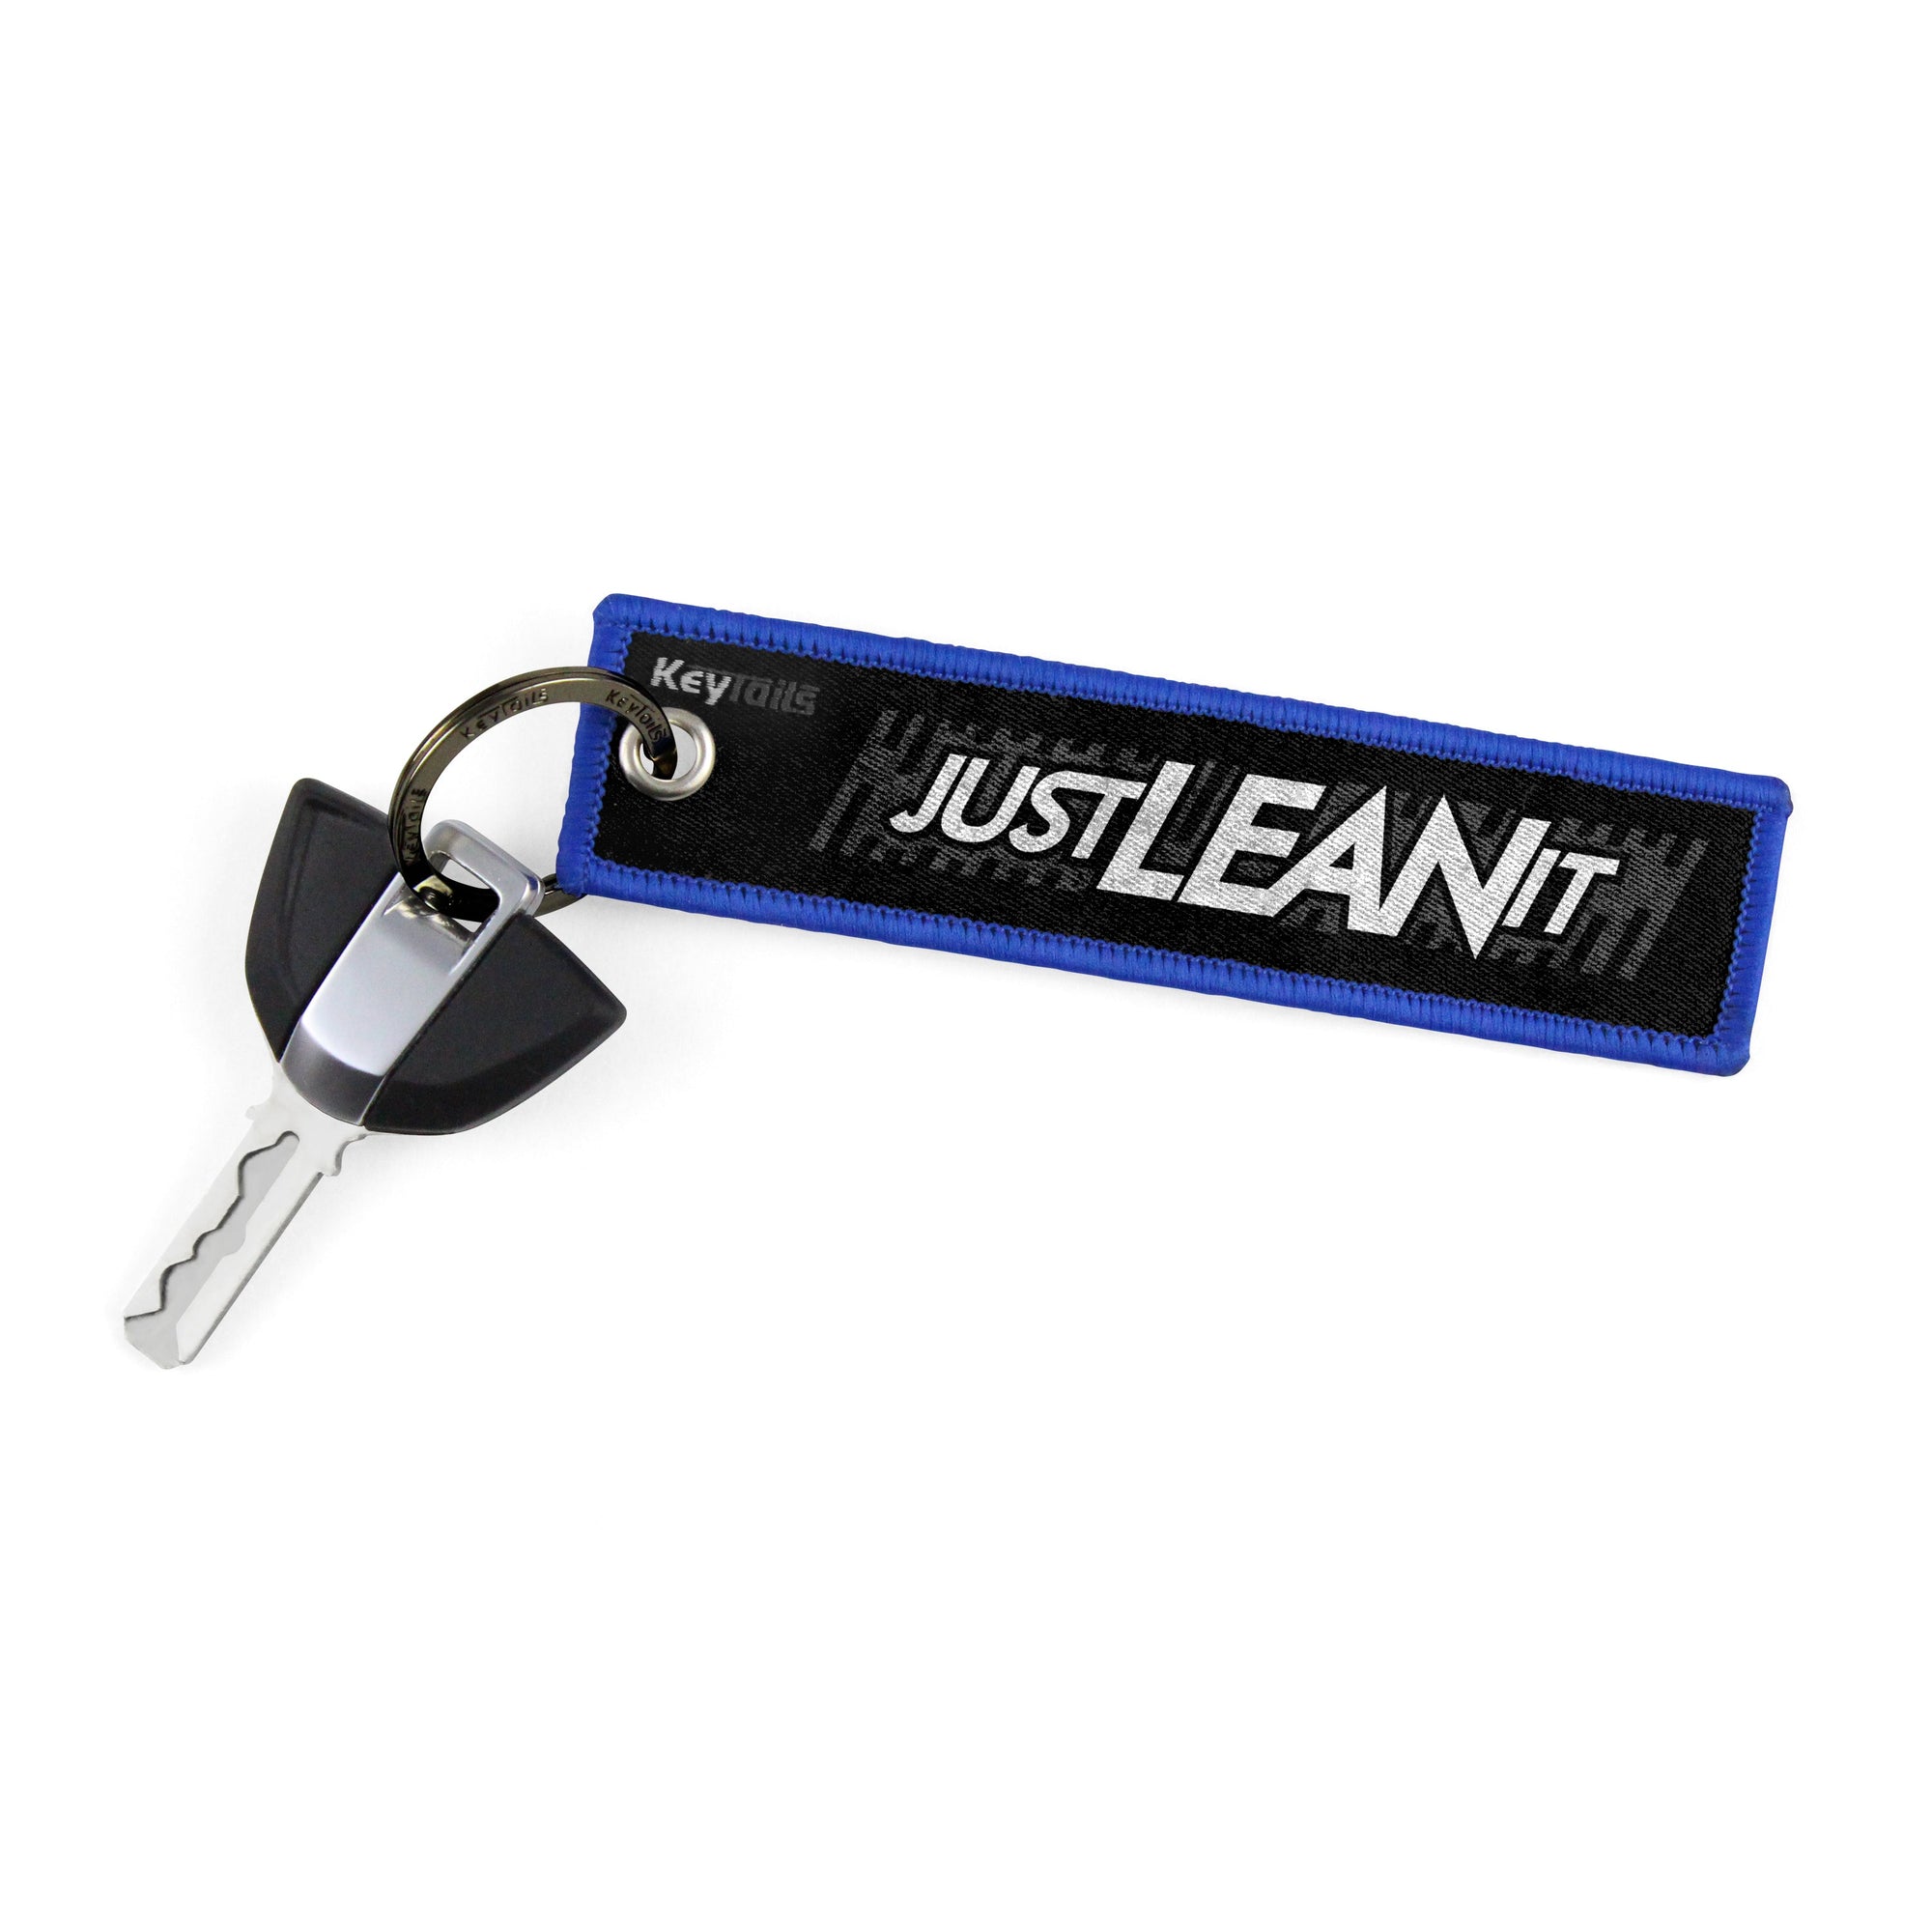 Just Lean It Keychain, Key Tag - Red